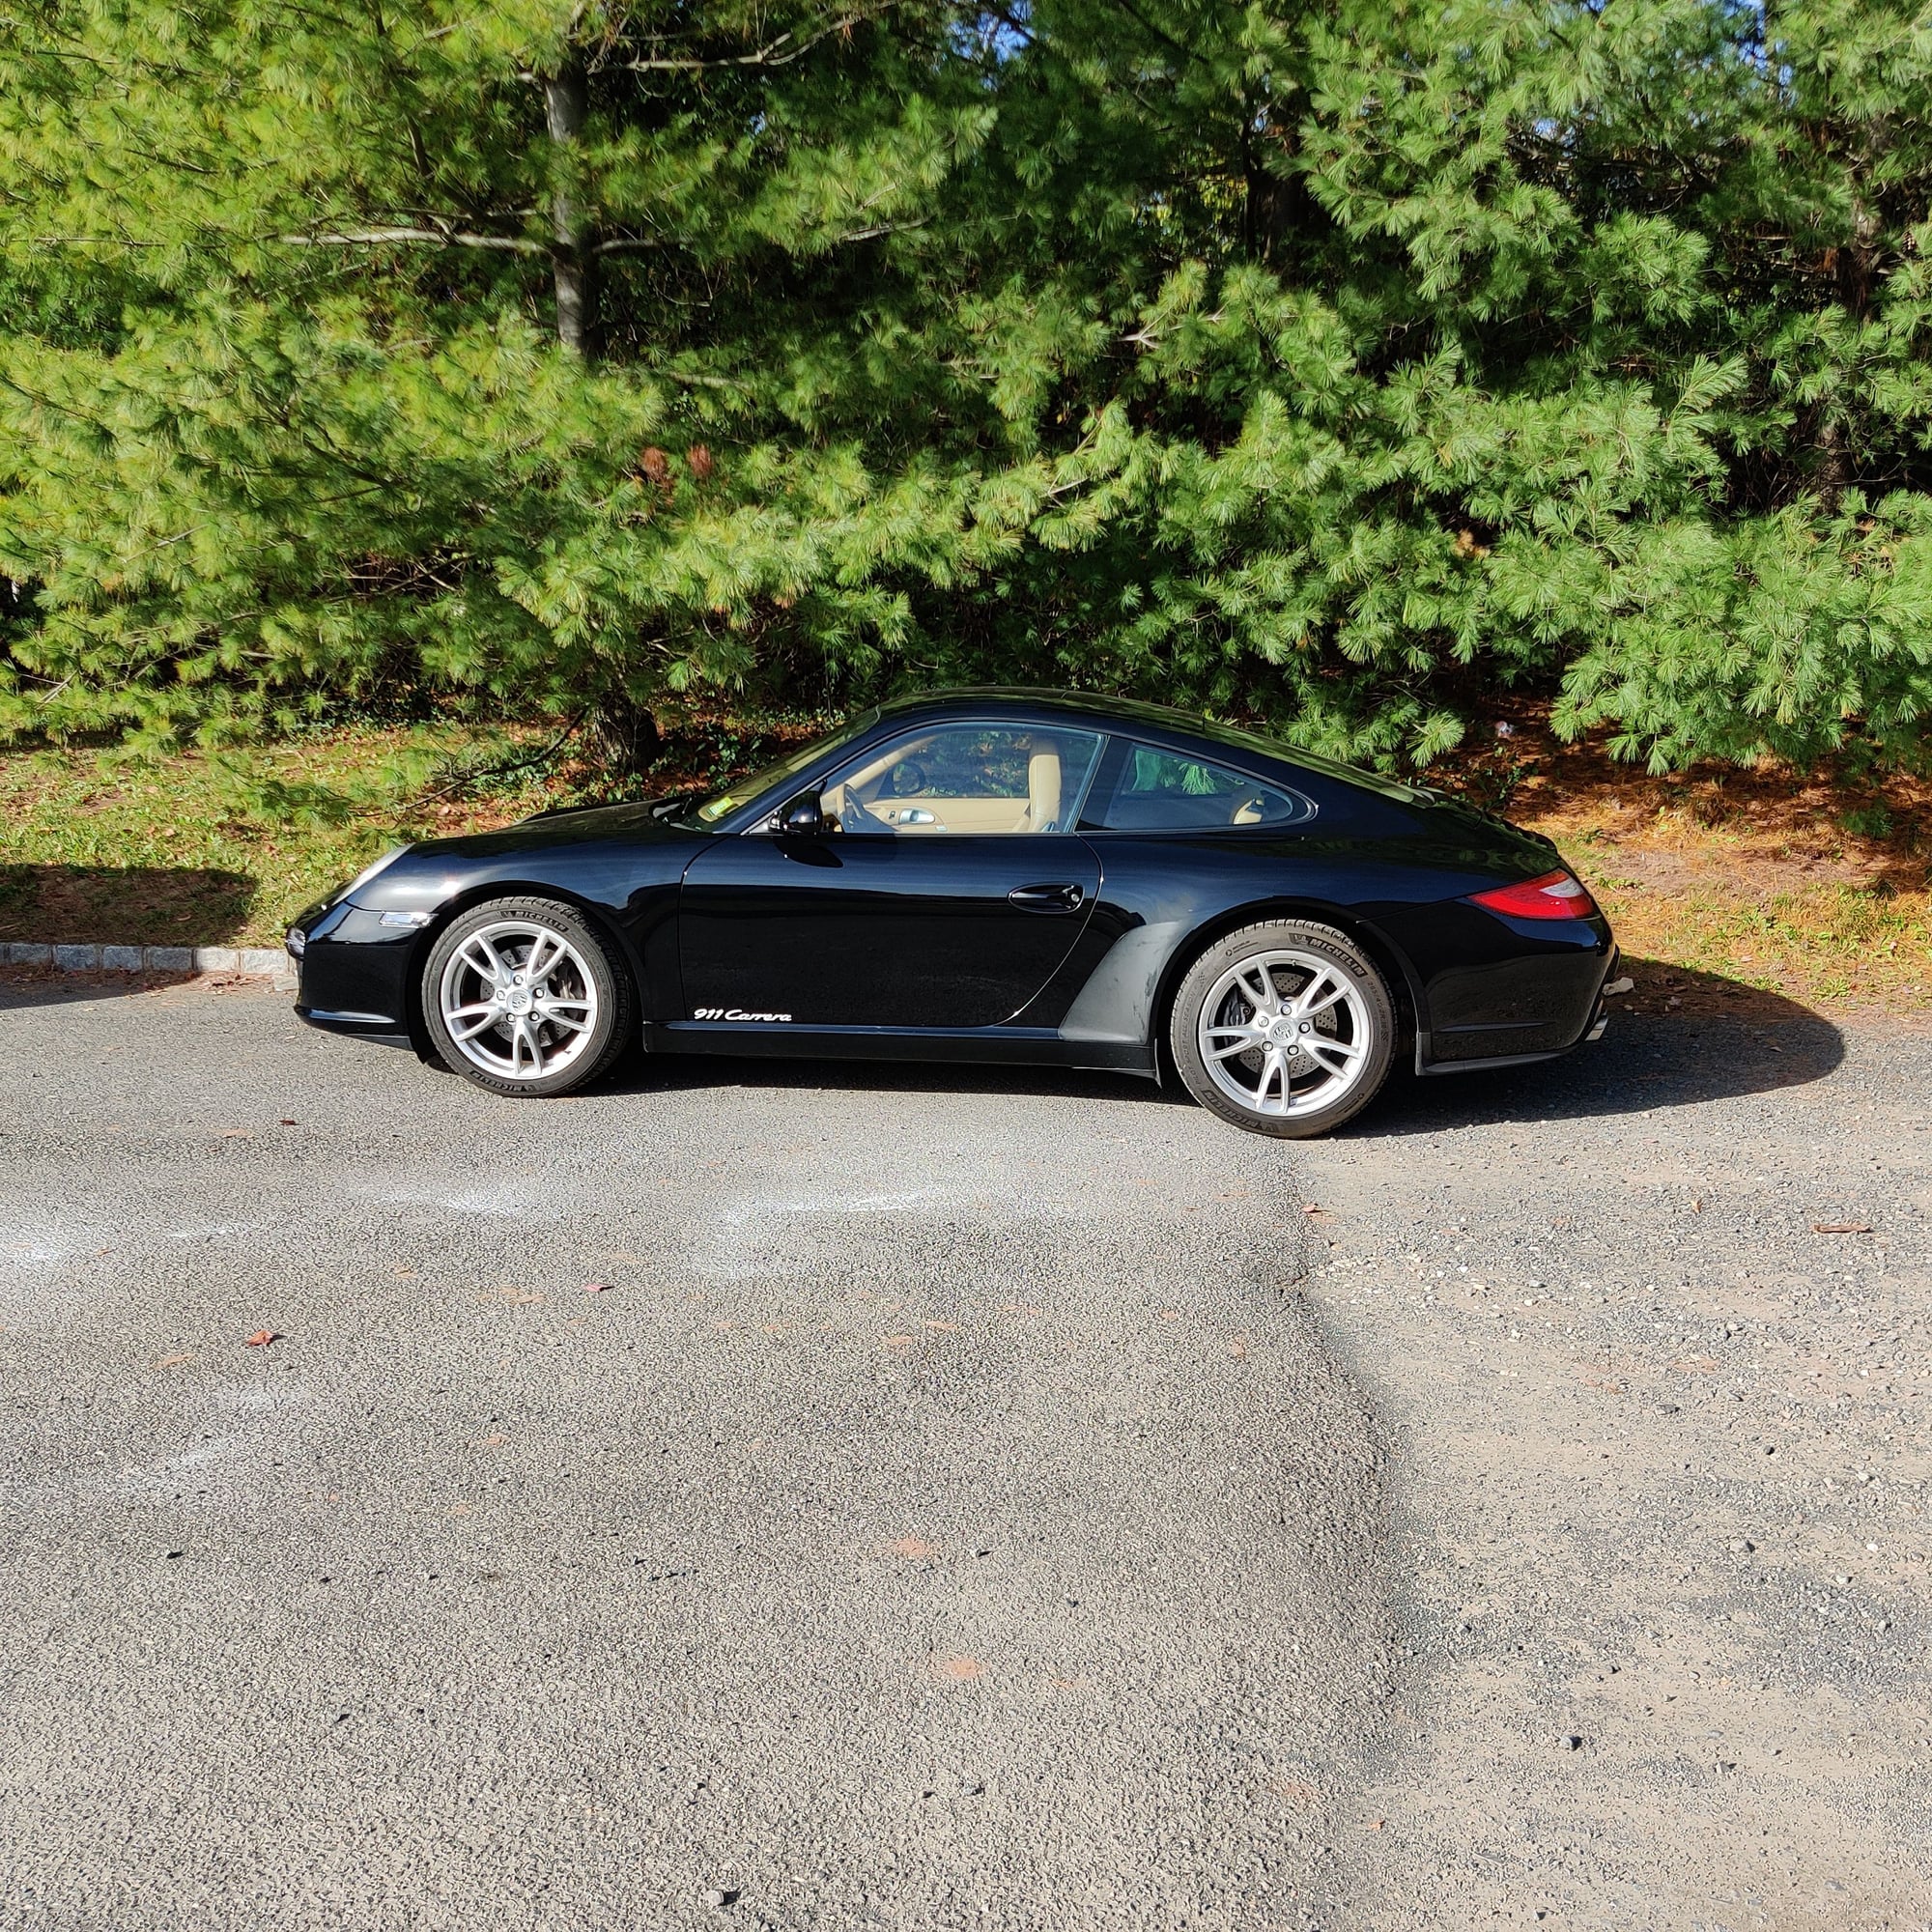 2009 Porsche 911 - 2009 997.2 Carrera (manual) - Used - VIN WP0AA29909S706384 - 135,000 Miles - 6 cyl - 2WD - Manual - Coupe - Black - Princeton, NJ 08544, United States